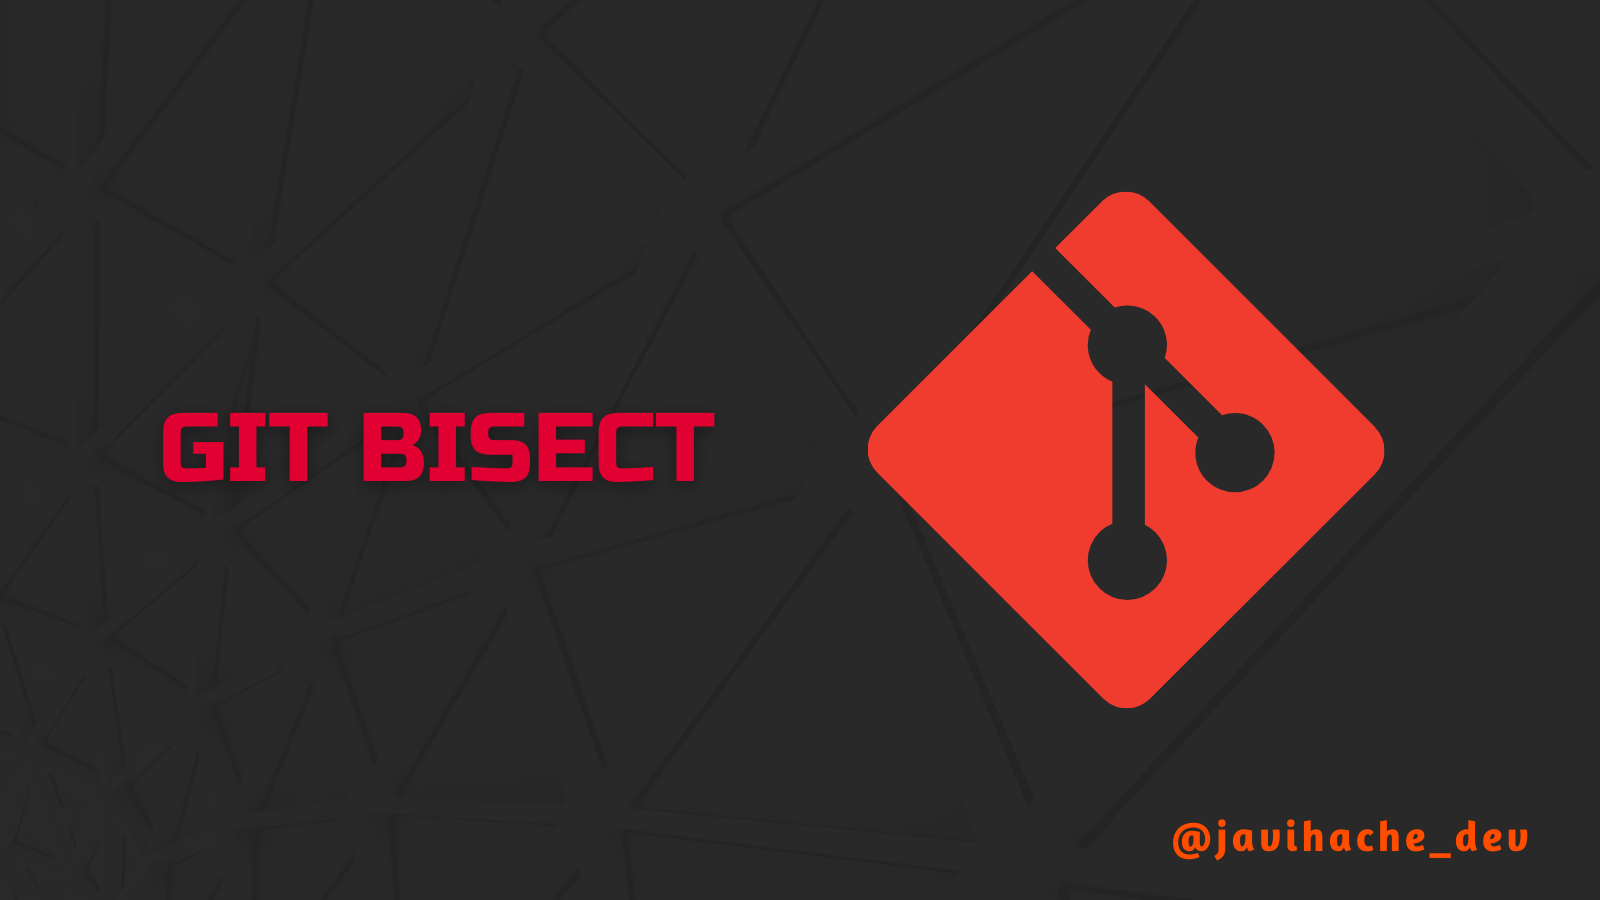 Git bisect card displaying the sentence "Git bisect" and git logo